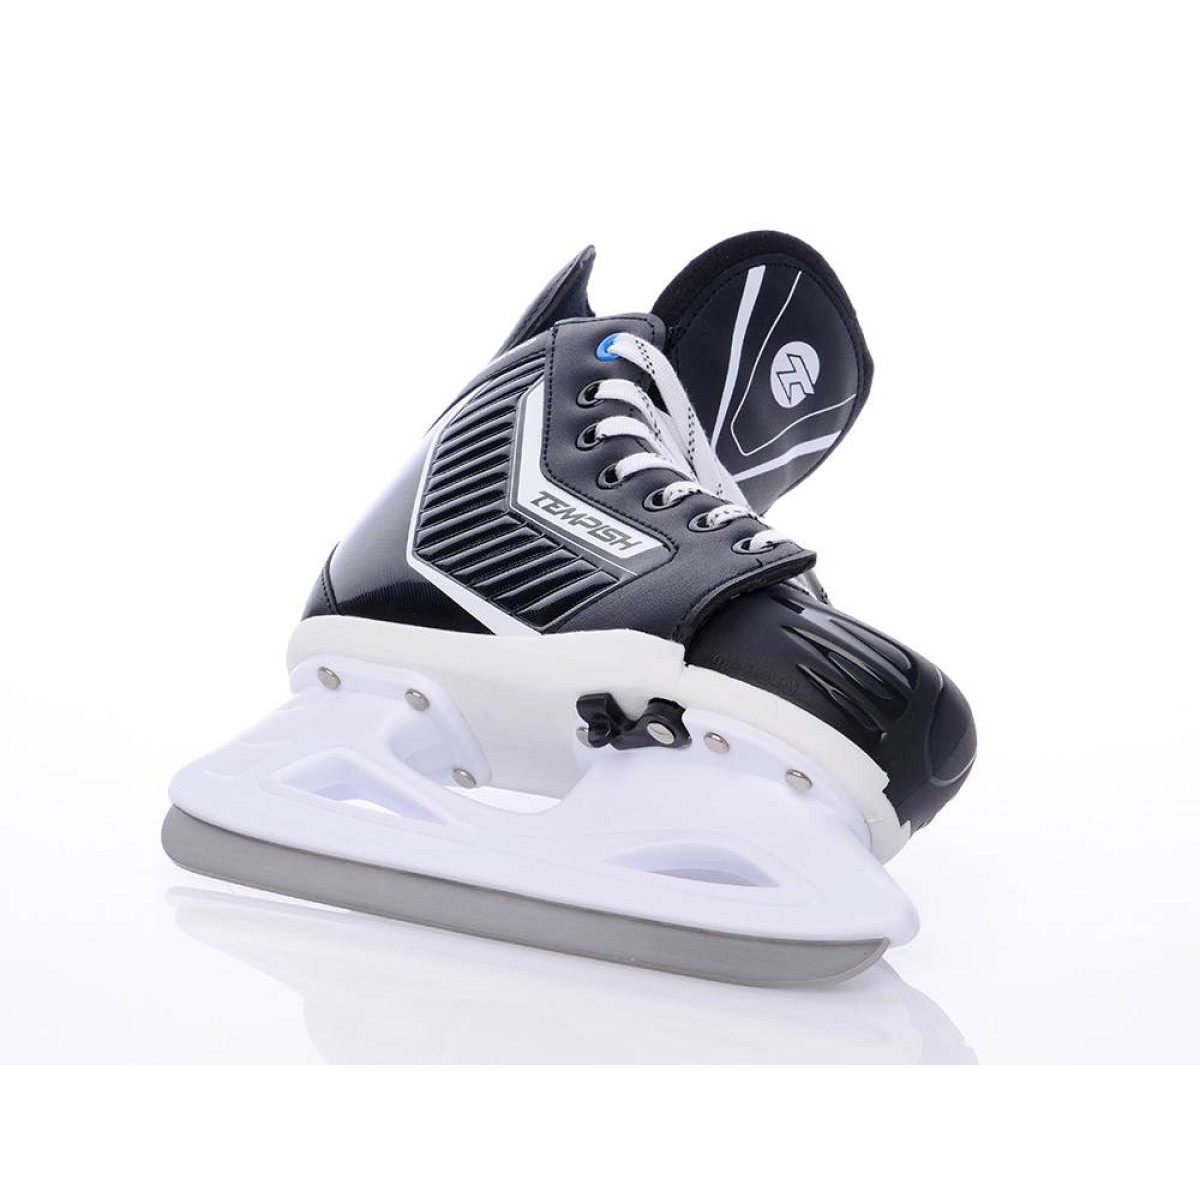 FS 200 adjustable hockey skate TEMPISH - view 13